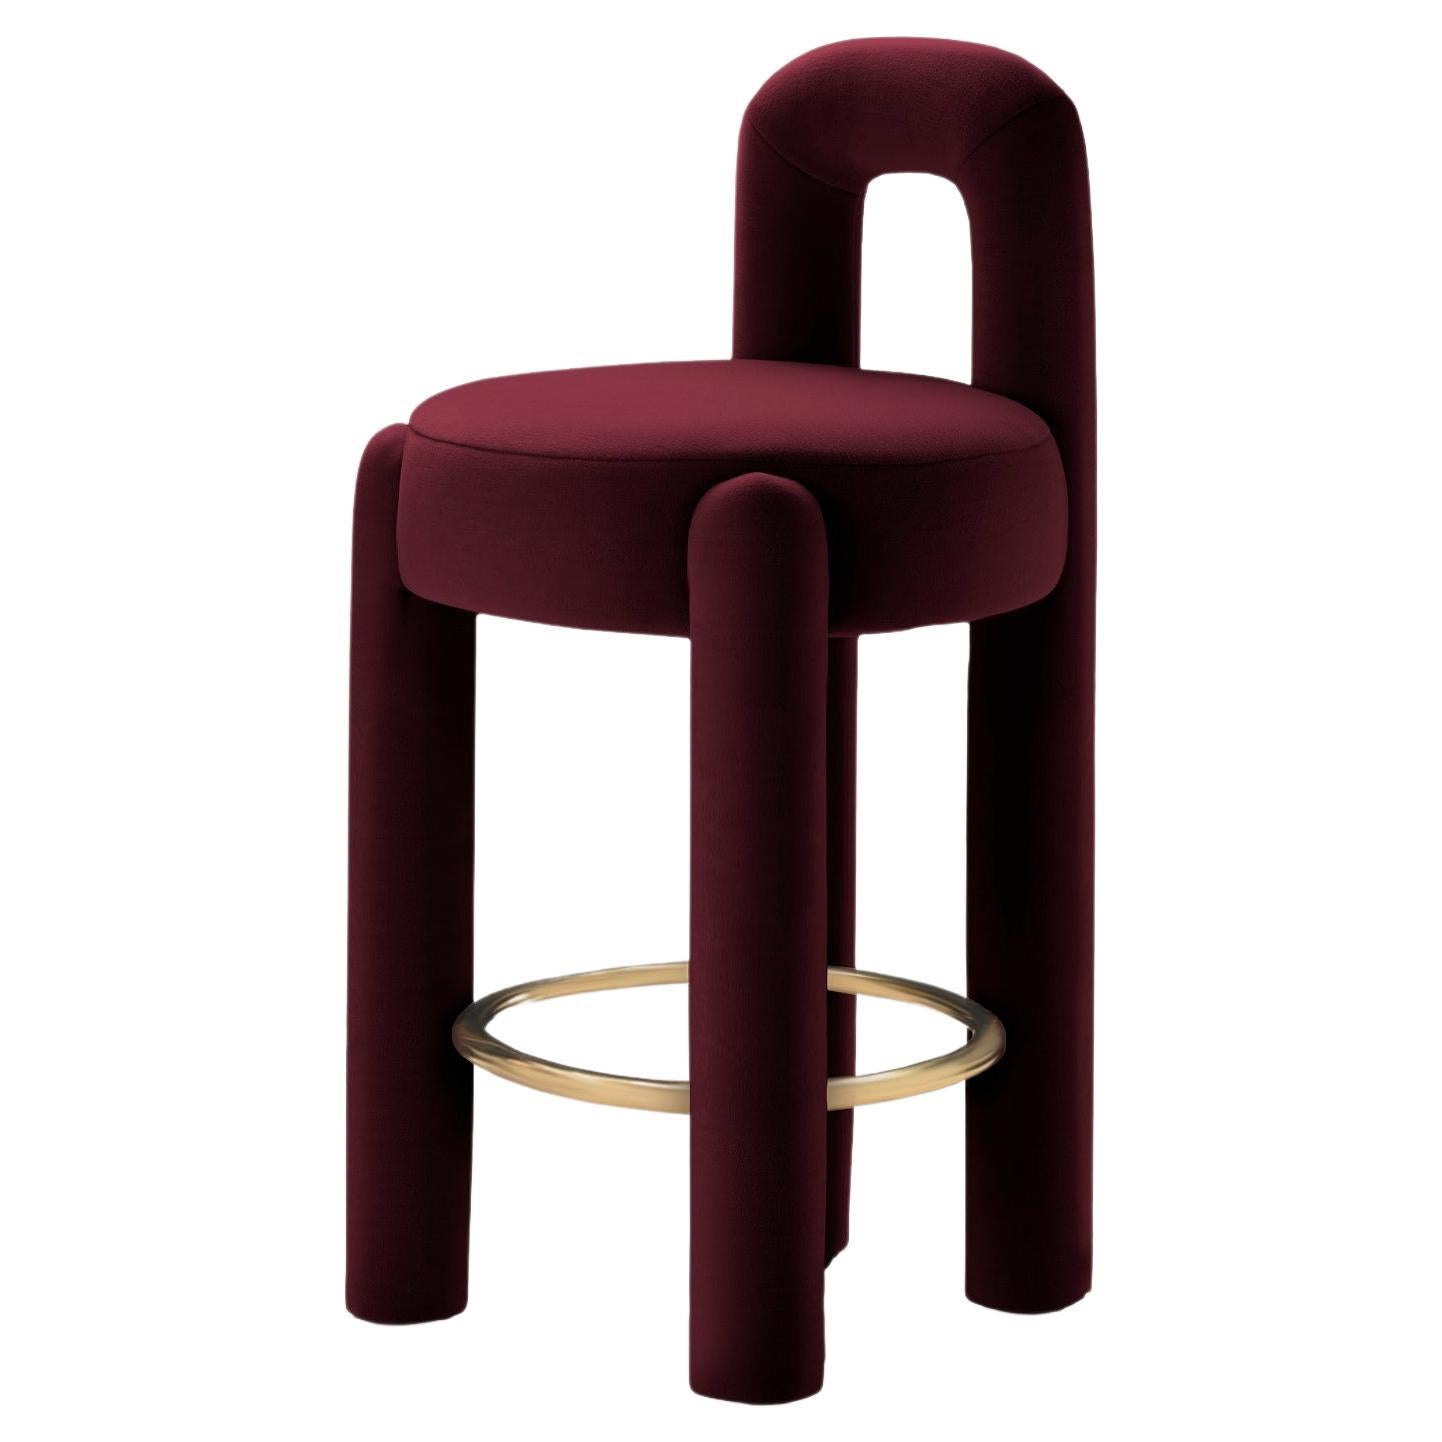 DOOQ! Organic Modern Marlon Bar Chair in Wein Kvadrat by P. Franceschini